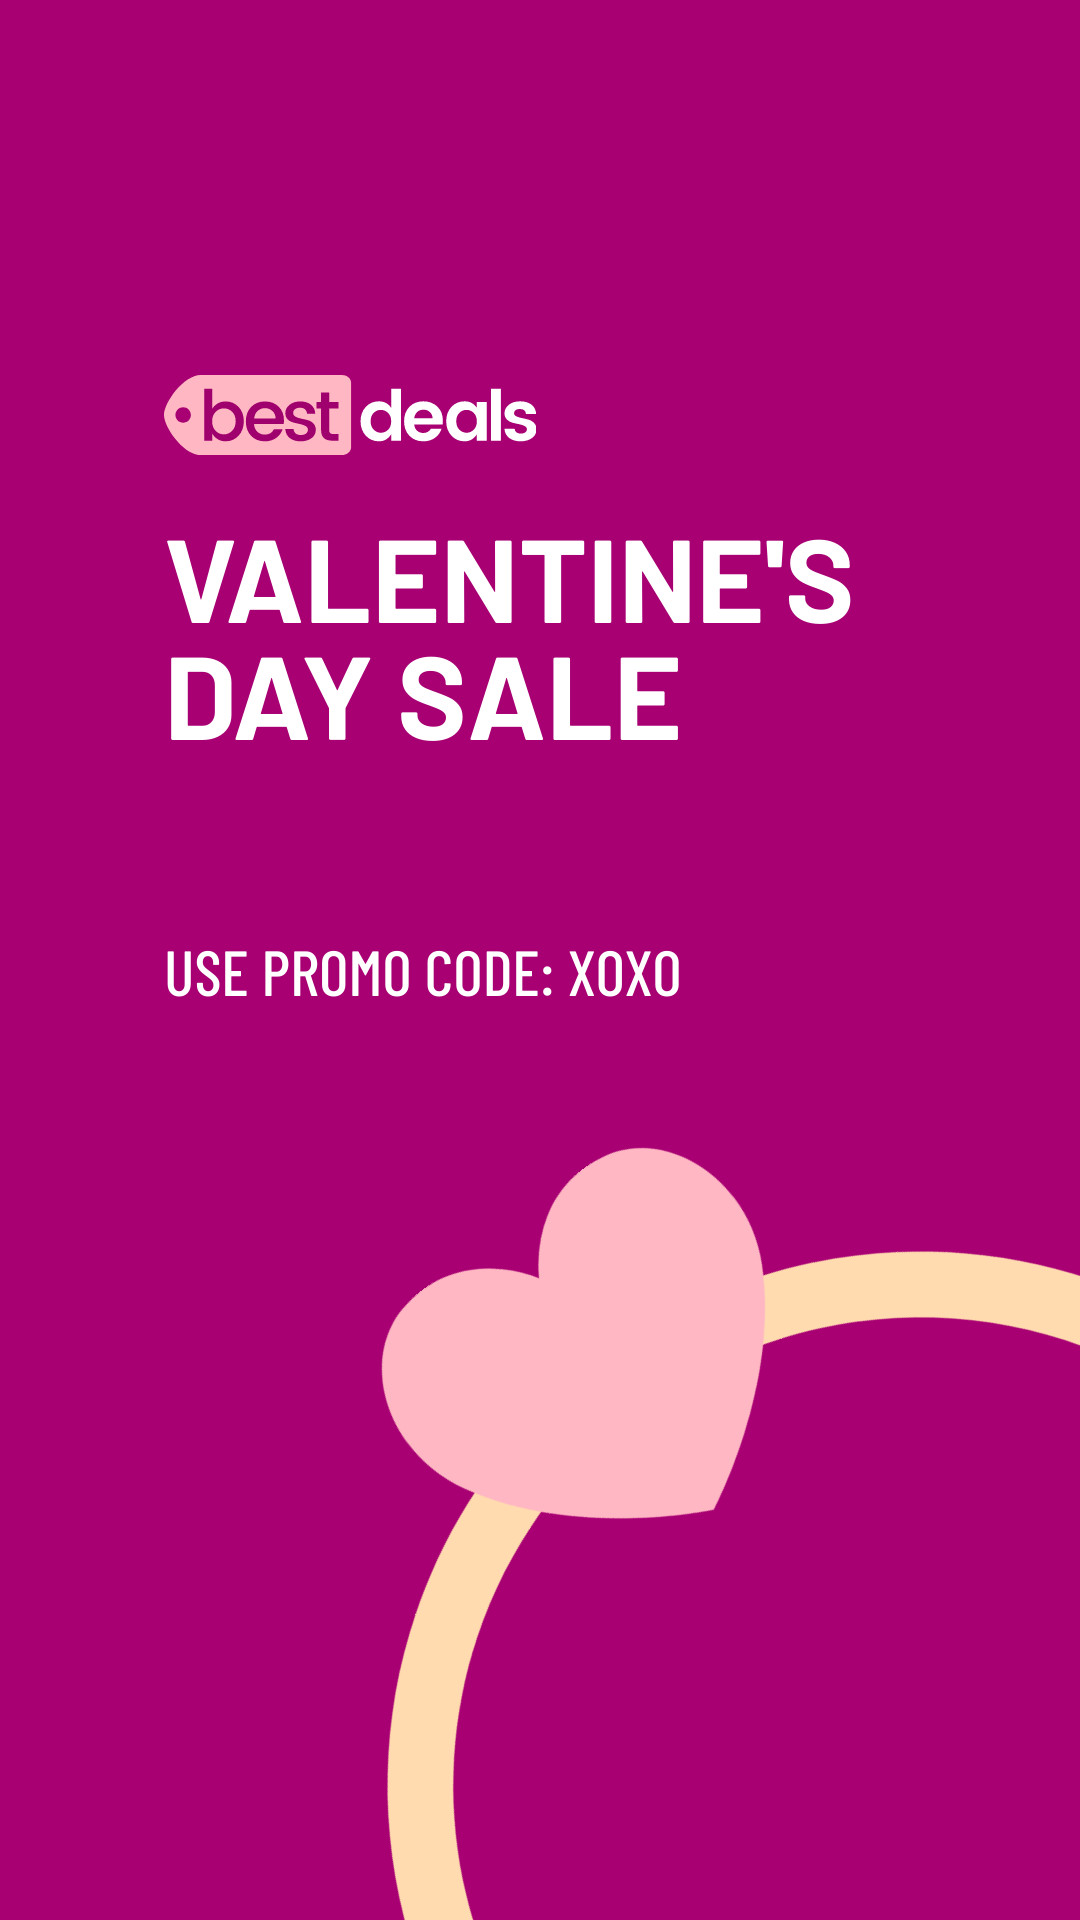 Valentine's Day Sale XOXO